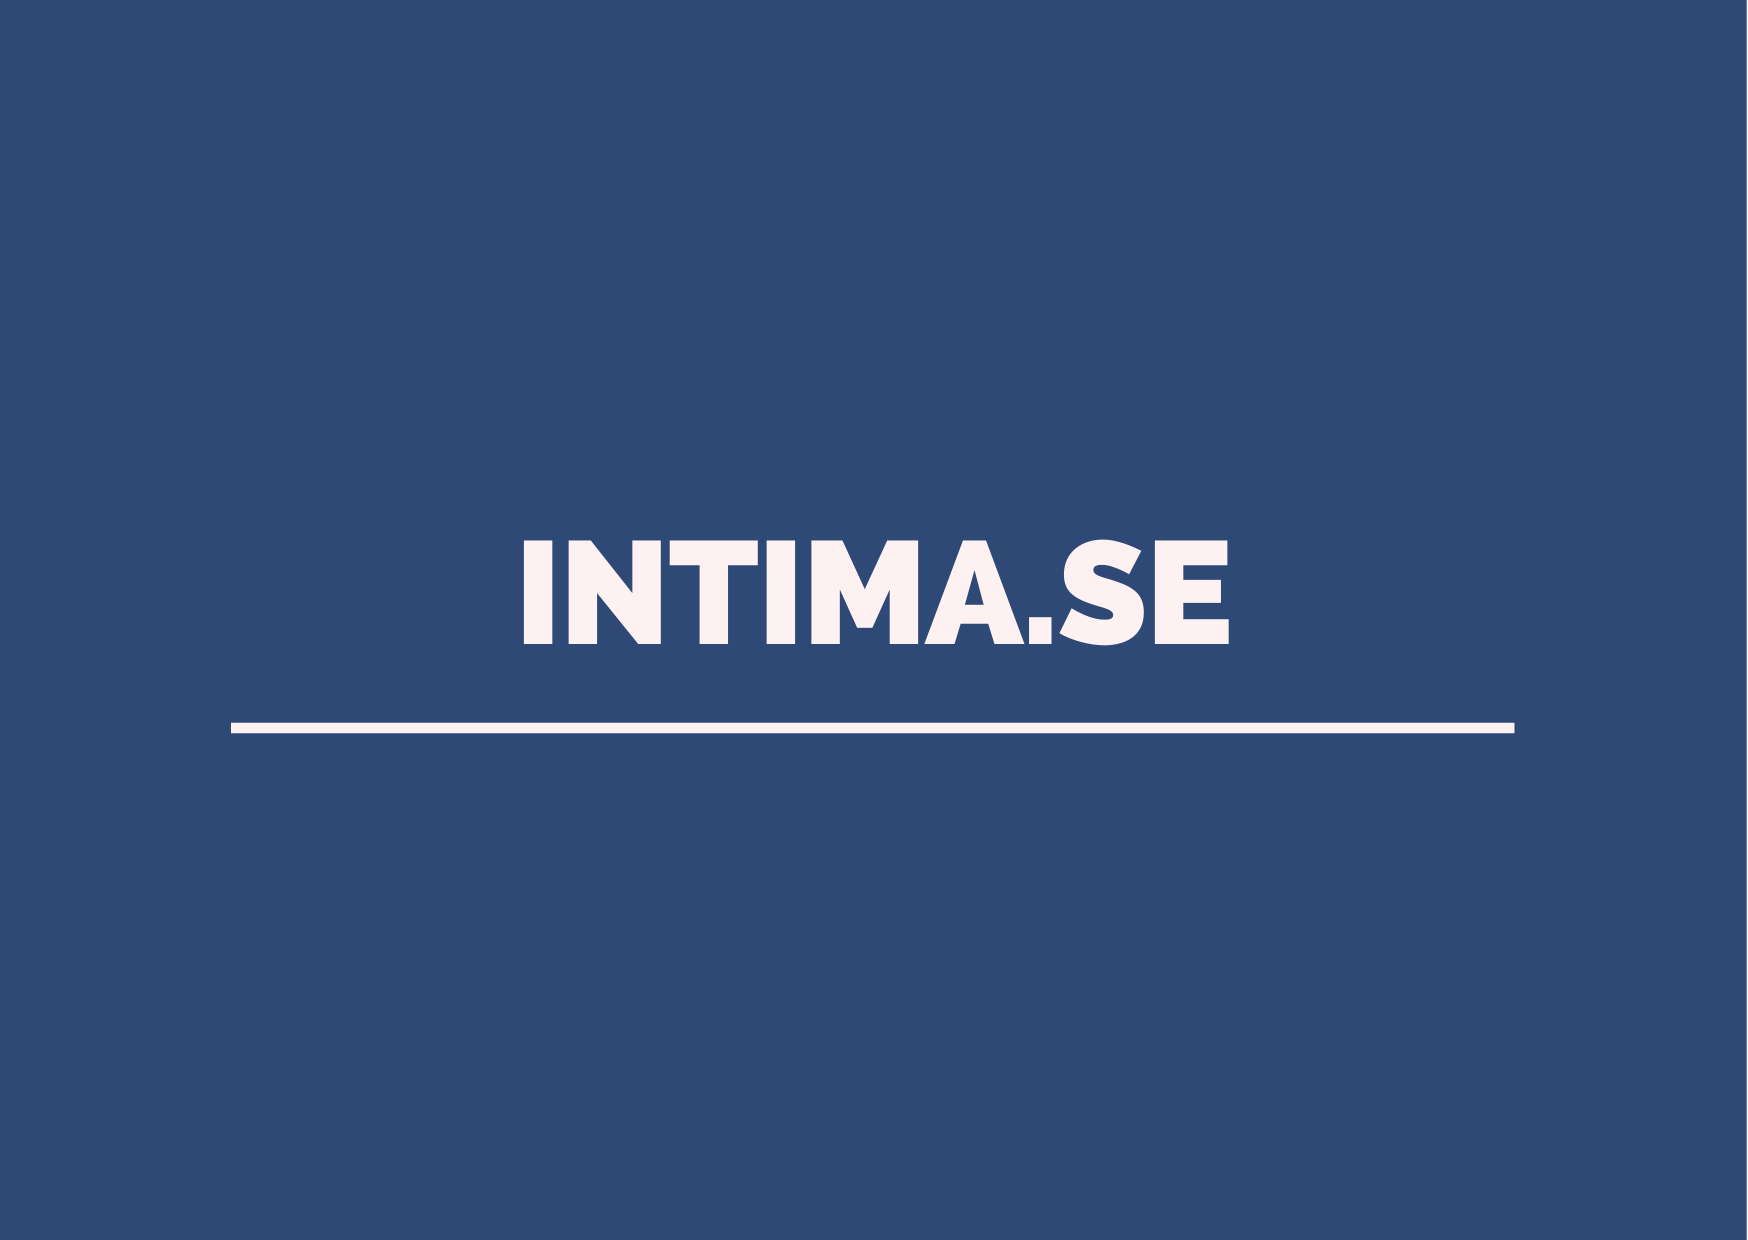 intima.se text